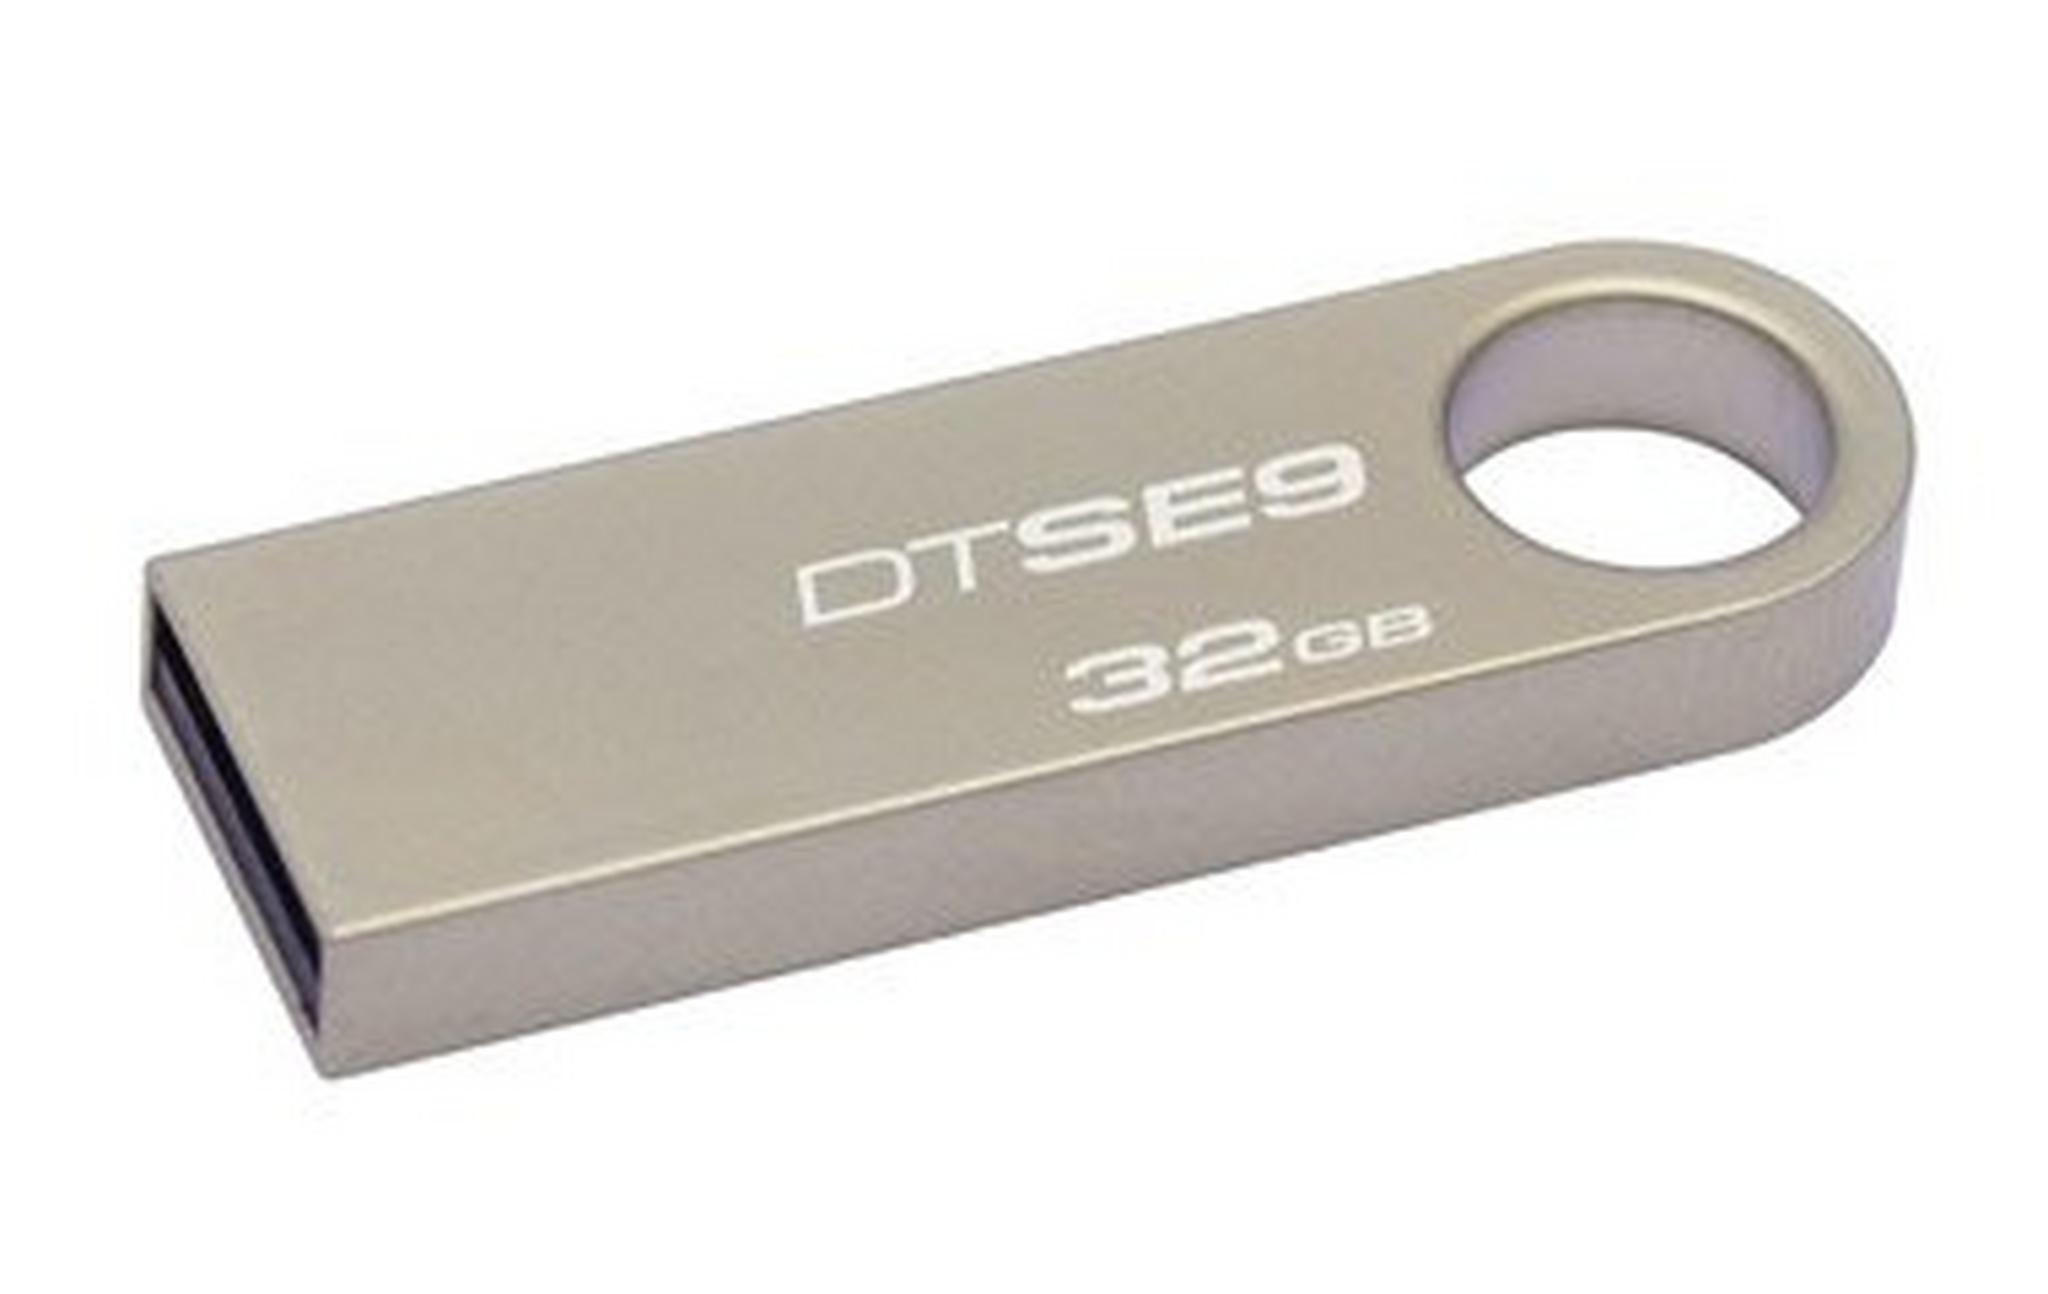 Kingston DataTraveler 32GB USB 2.0 Flash Drive Model DTSE9H/32GBZ